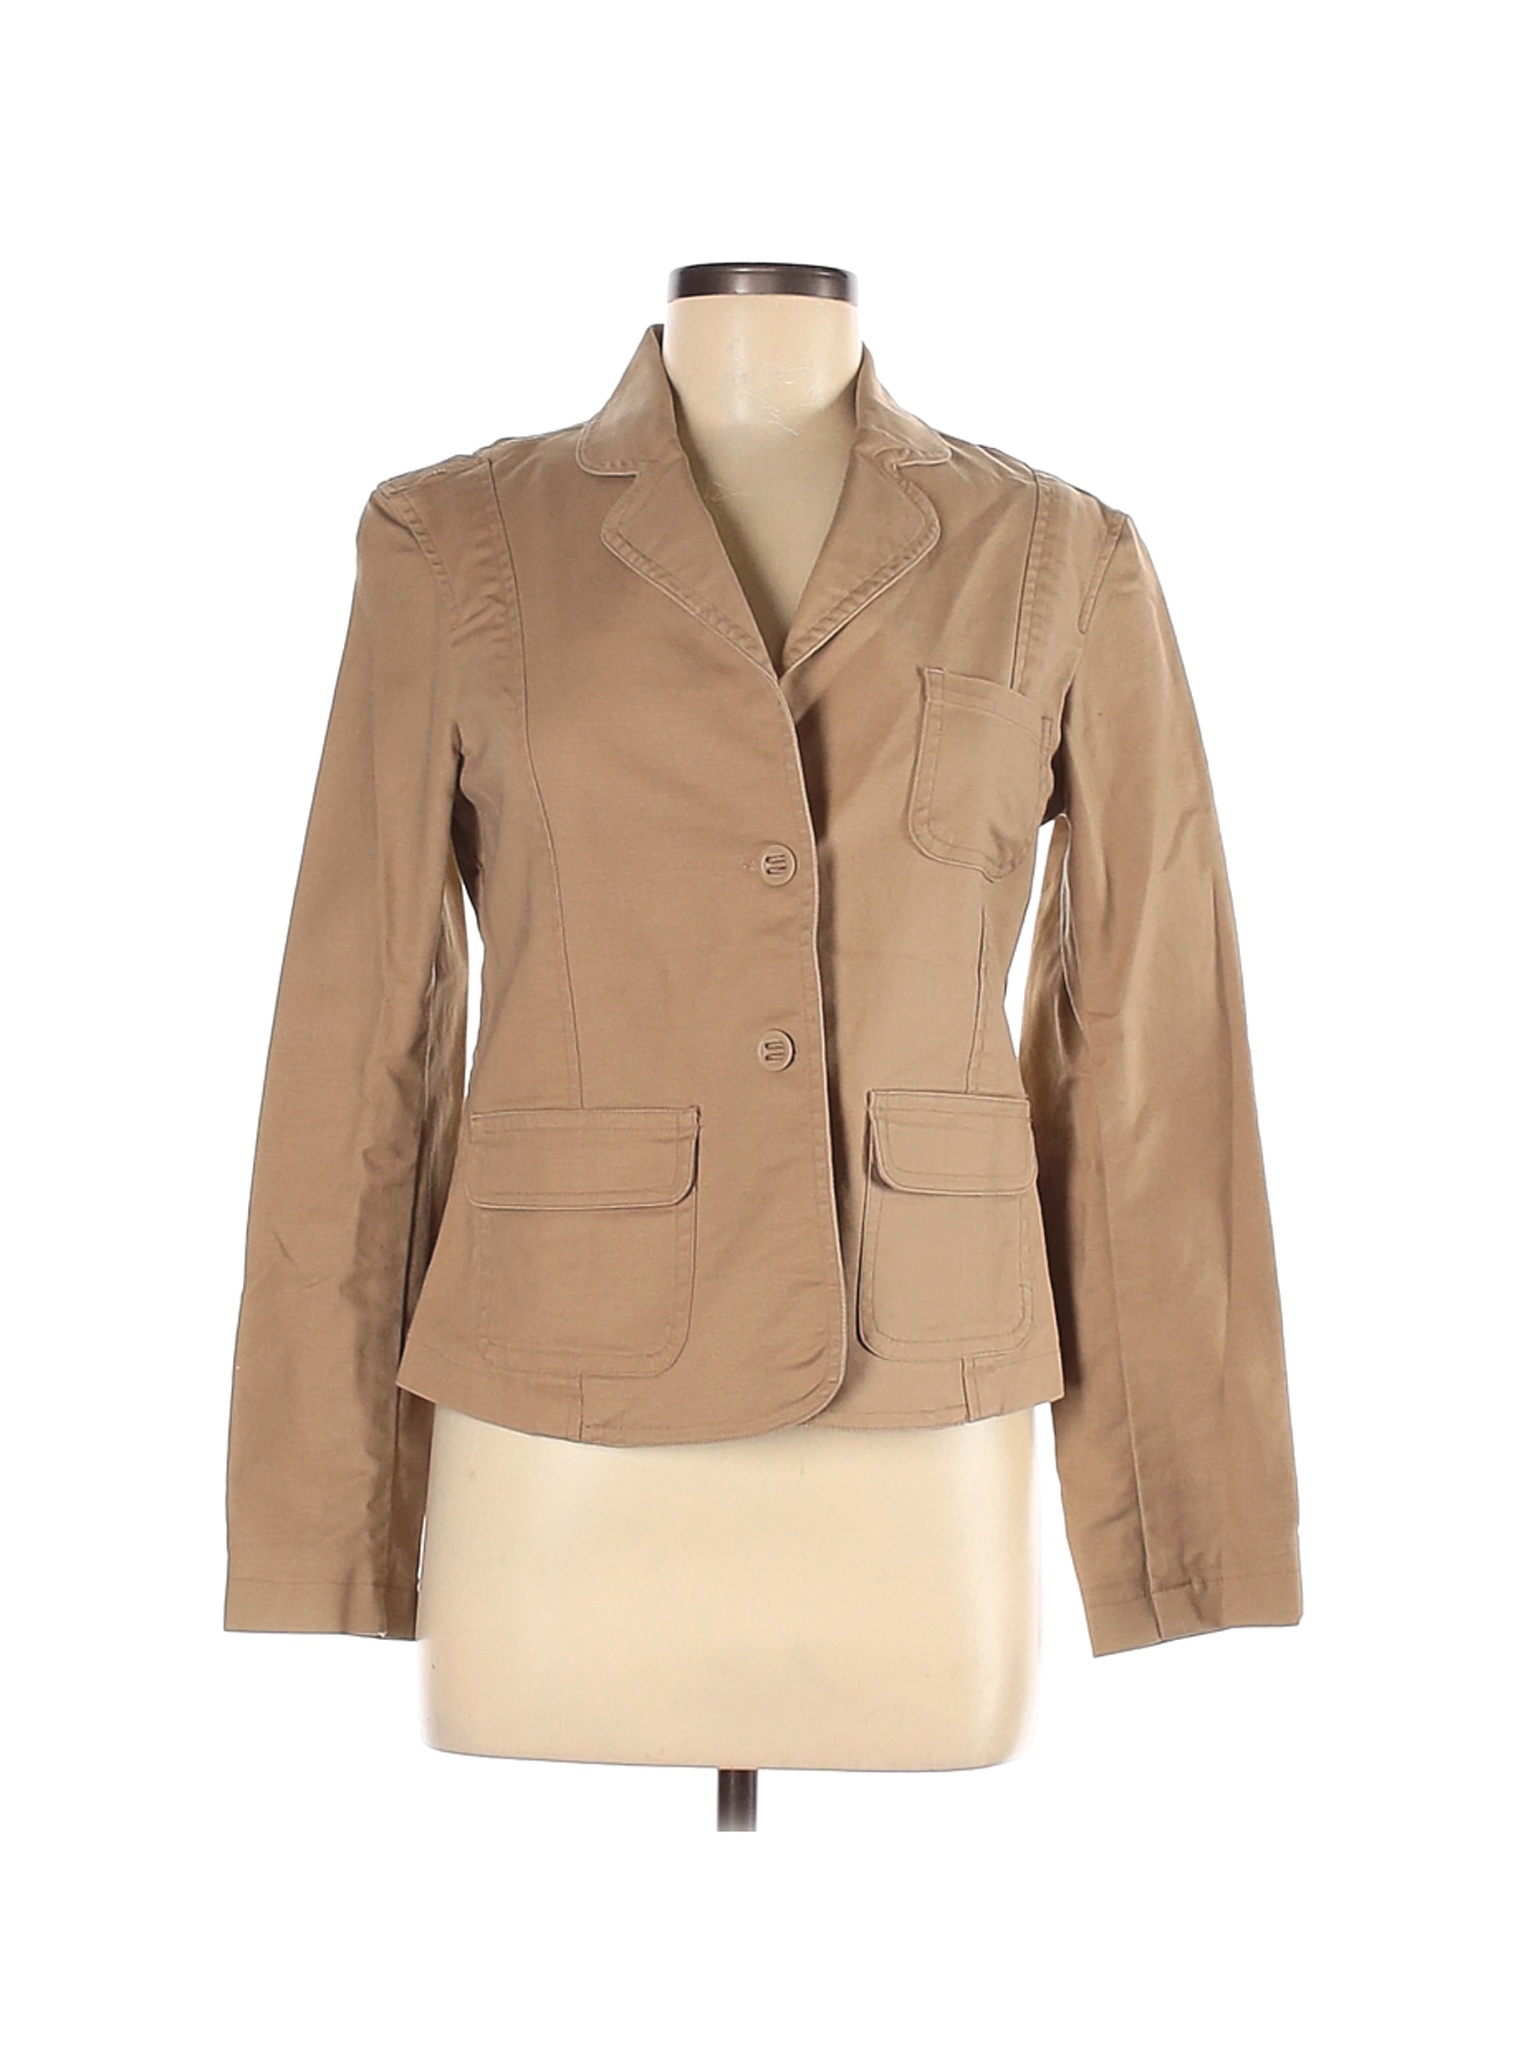 Austin Clothing Co. Women Brown Blazer M | eBay